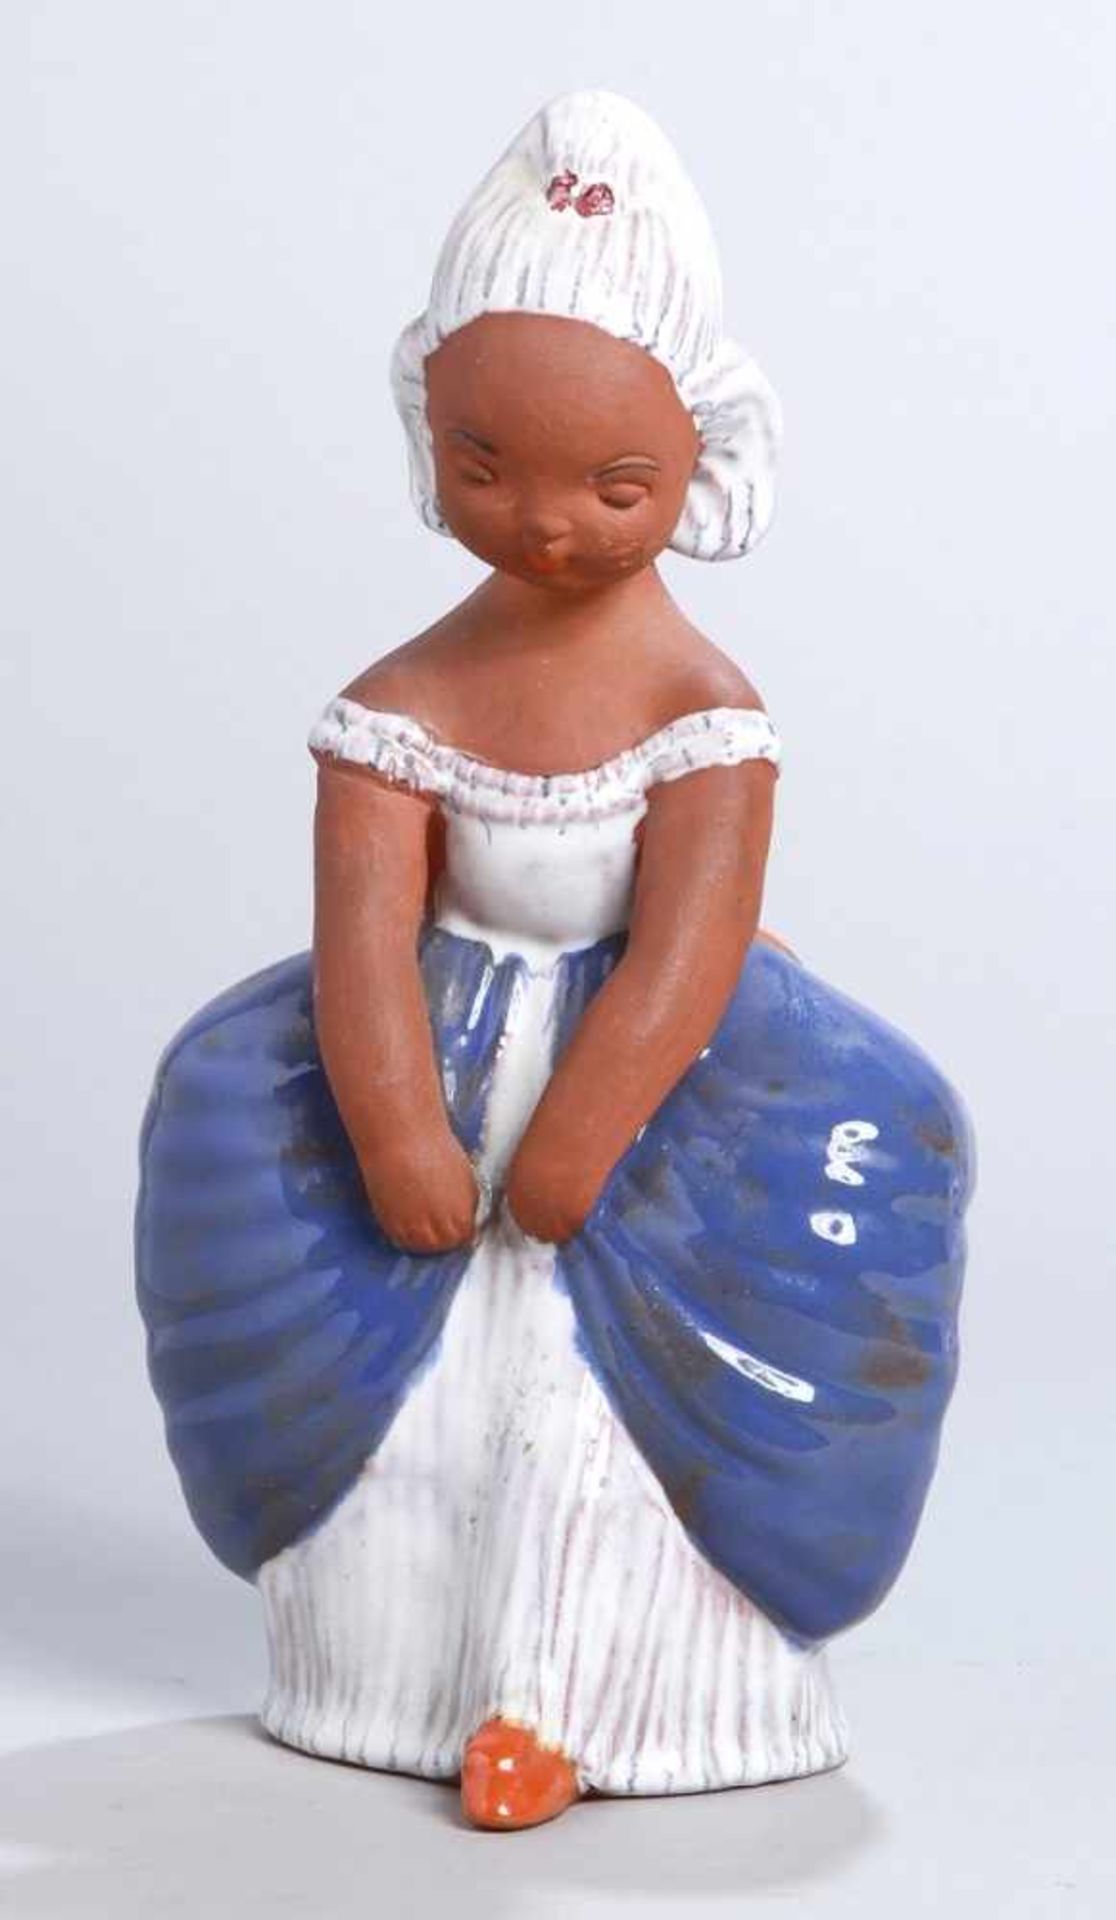 Terracotta-Figur, "Mädchen", Keramia, Znaim, Czechoslovakia, 30/40er Jahre, Entw.: wohlKarl